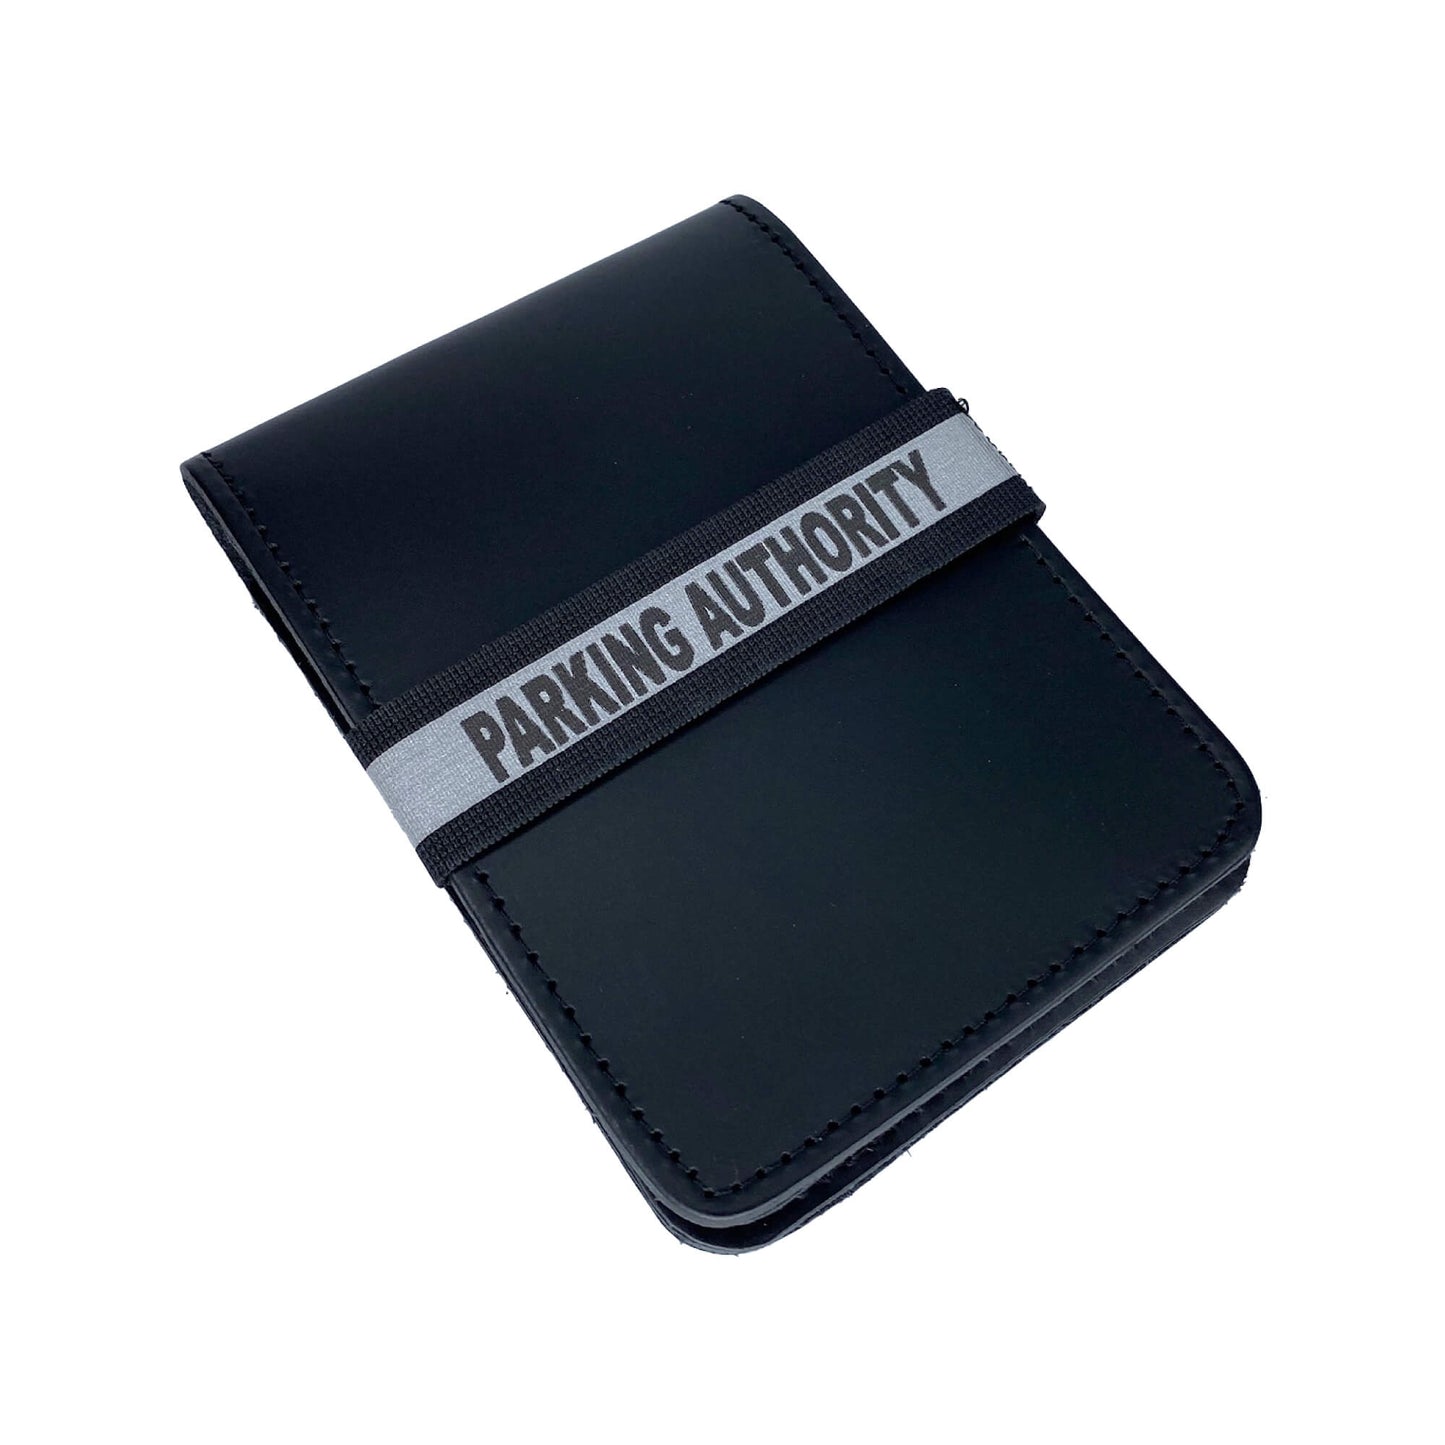 Parking Authority Reflective 3M Notebook ID Band-911 Duty Gear USA-911 Duty Gear USA